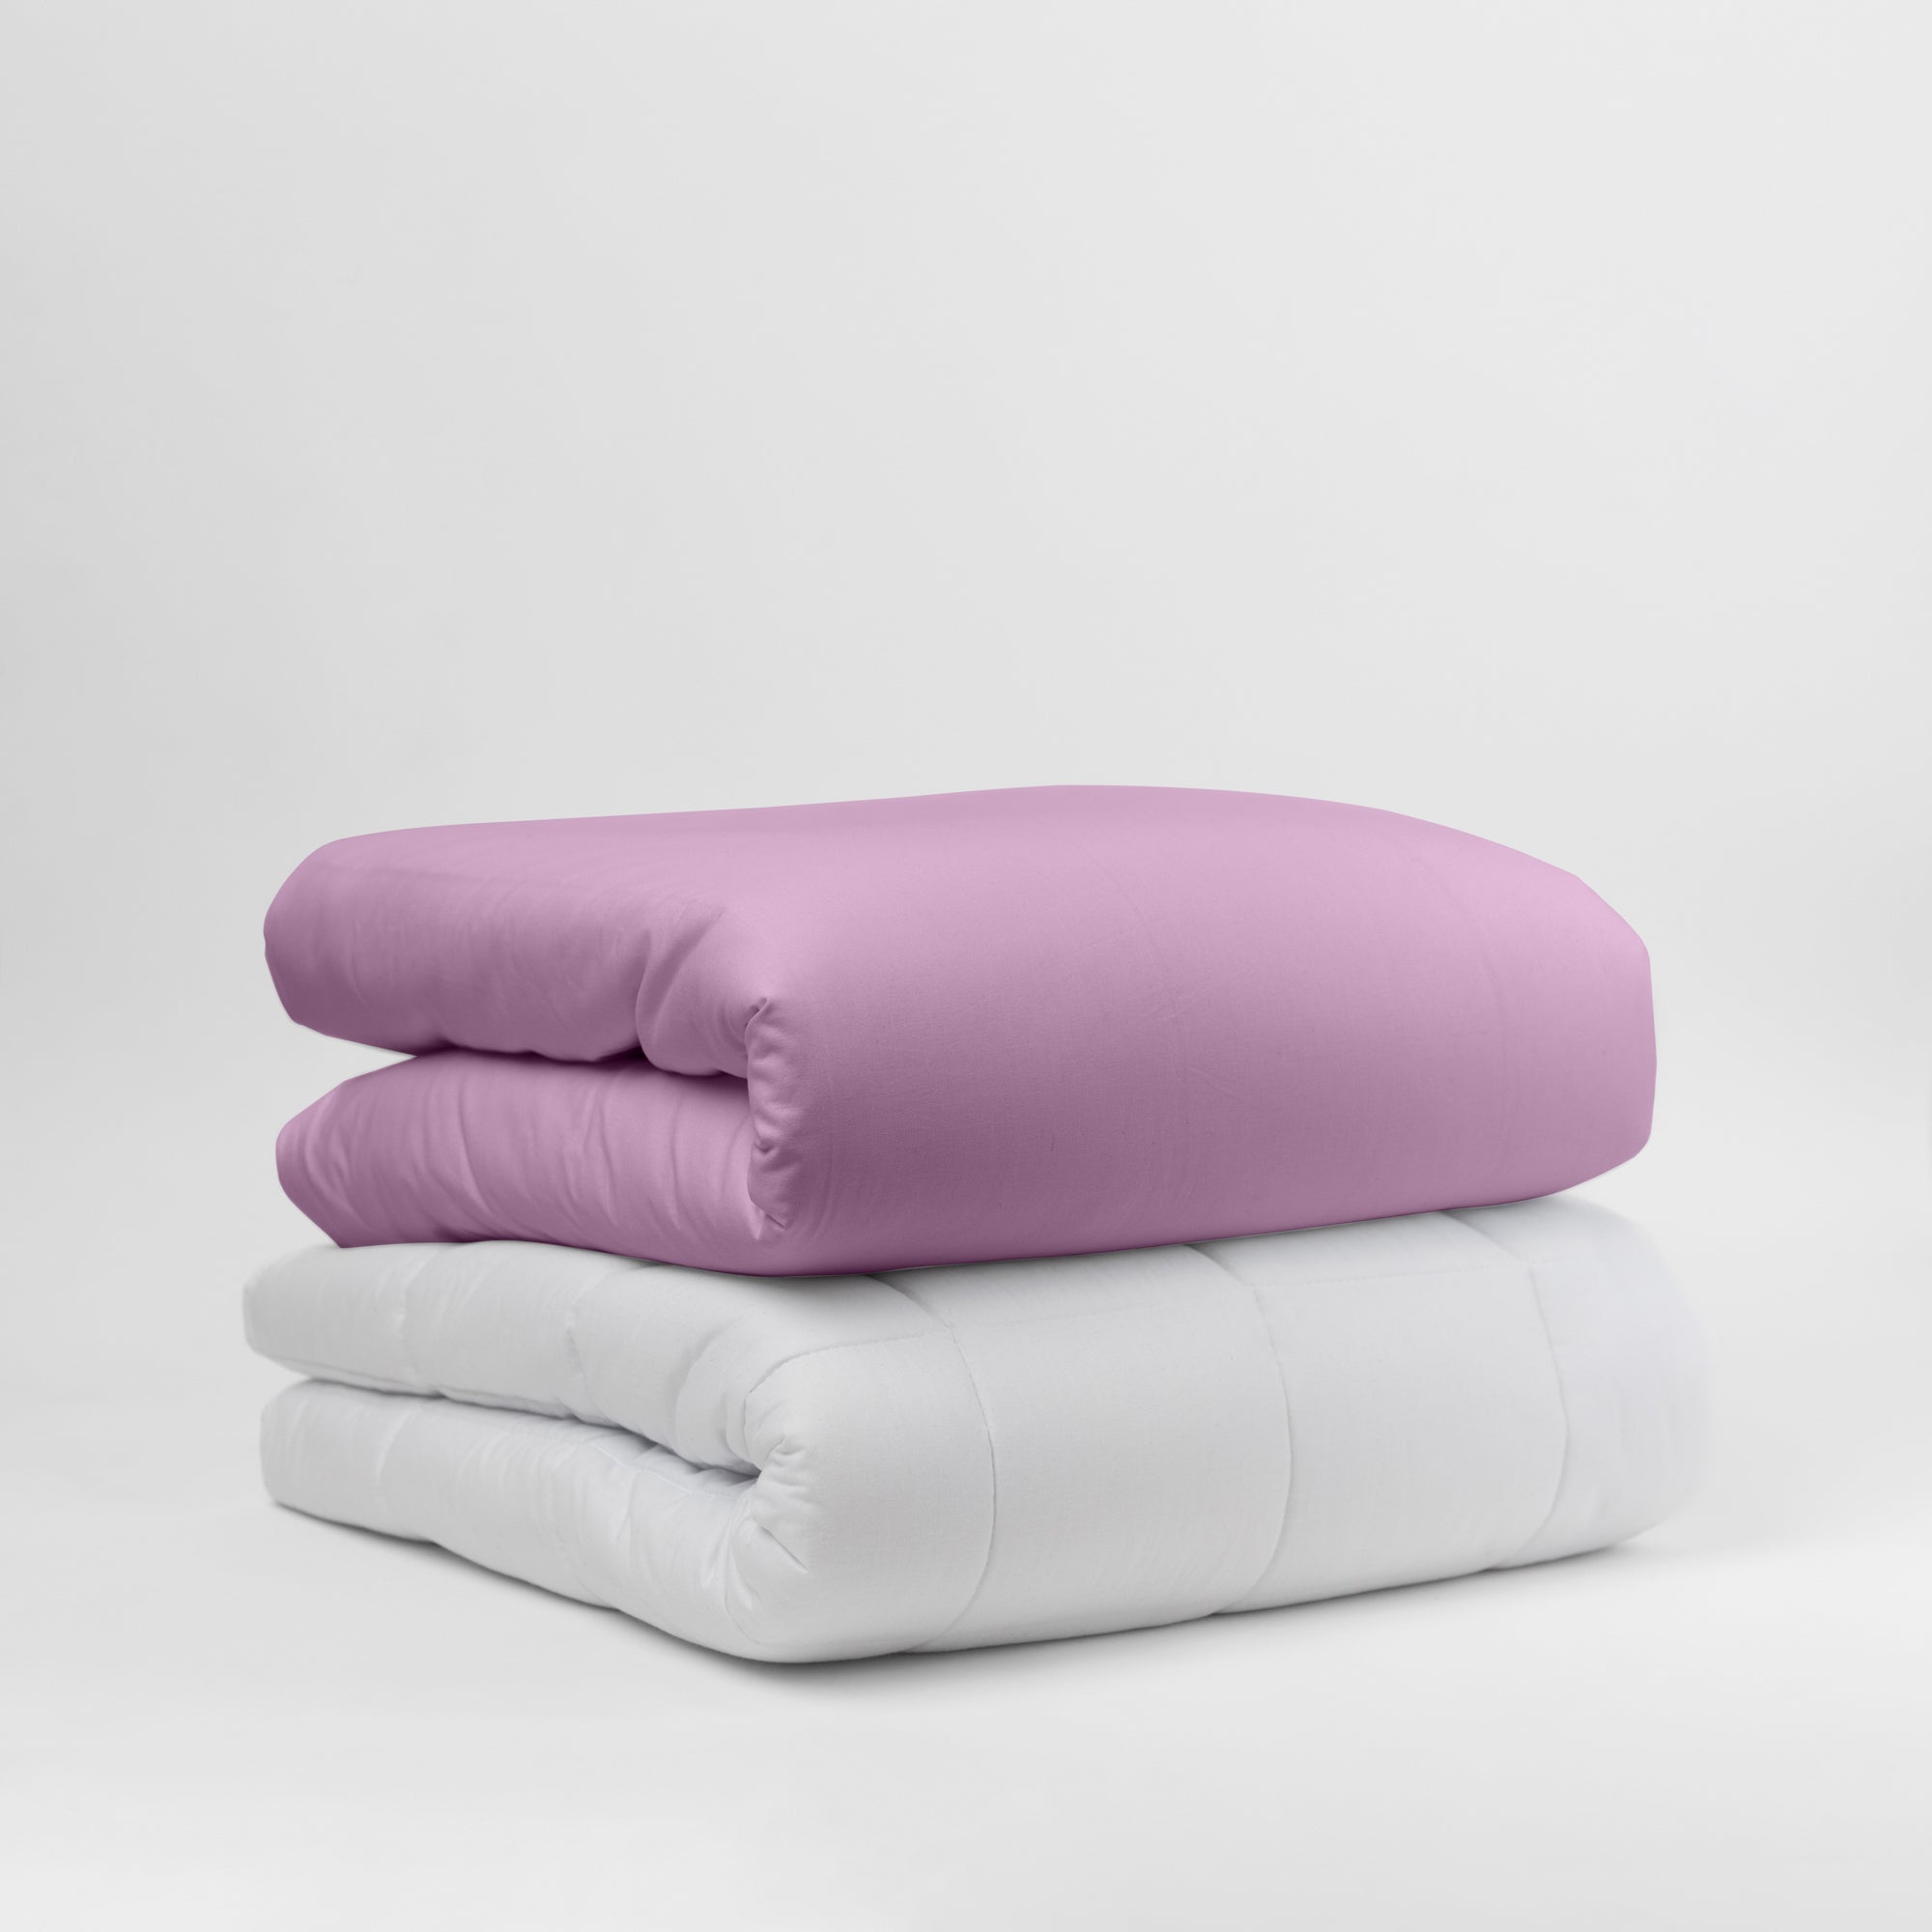 Gravity Blanket Premium Cotton